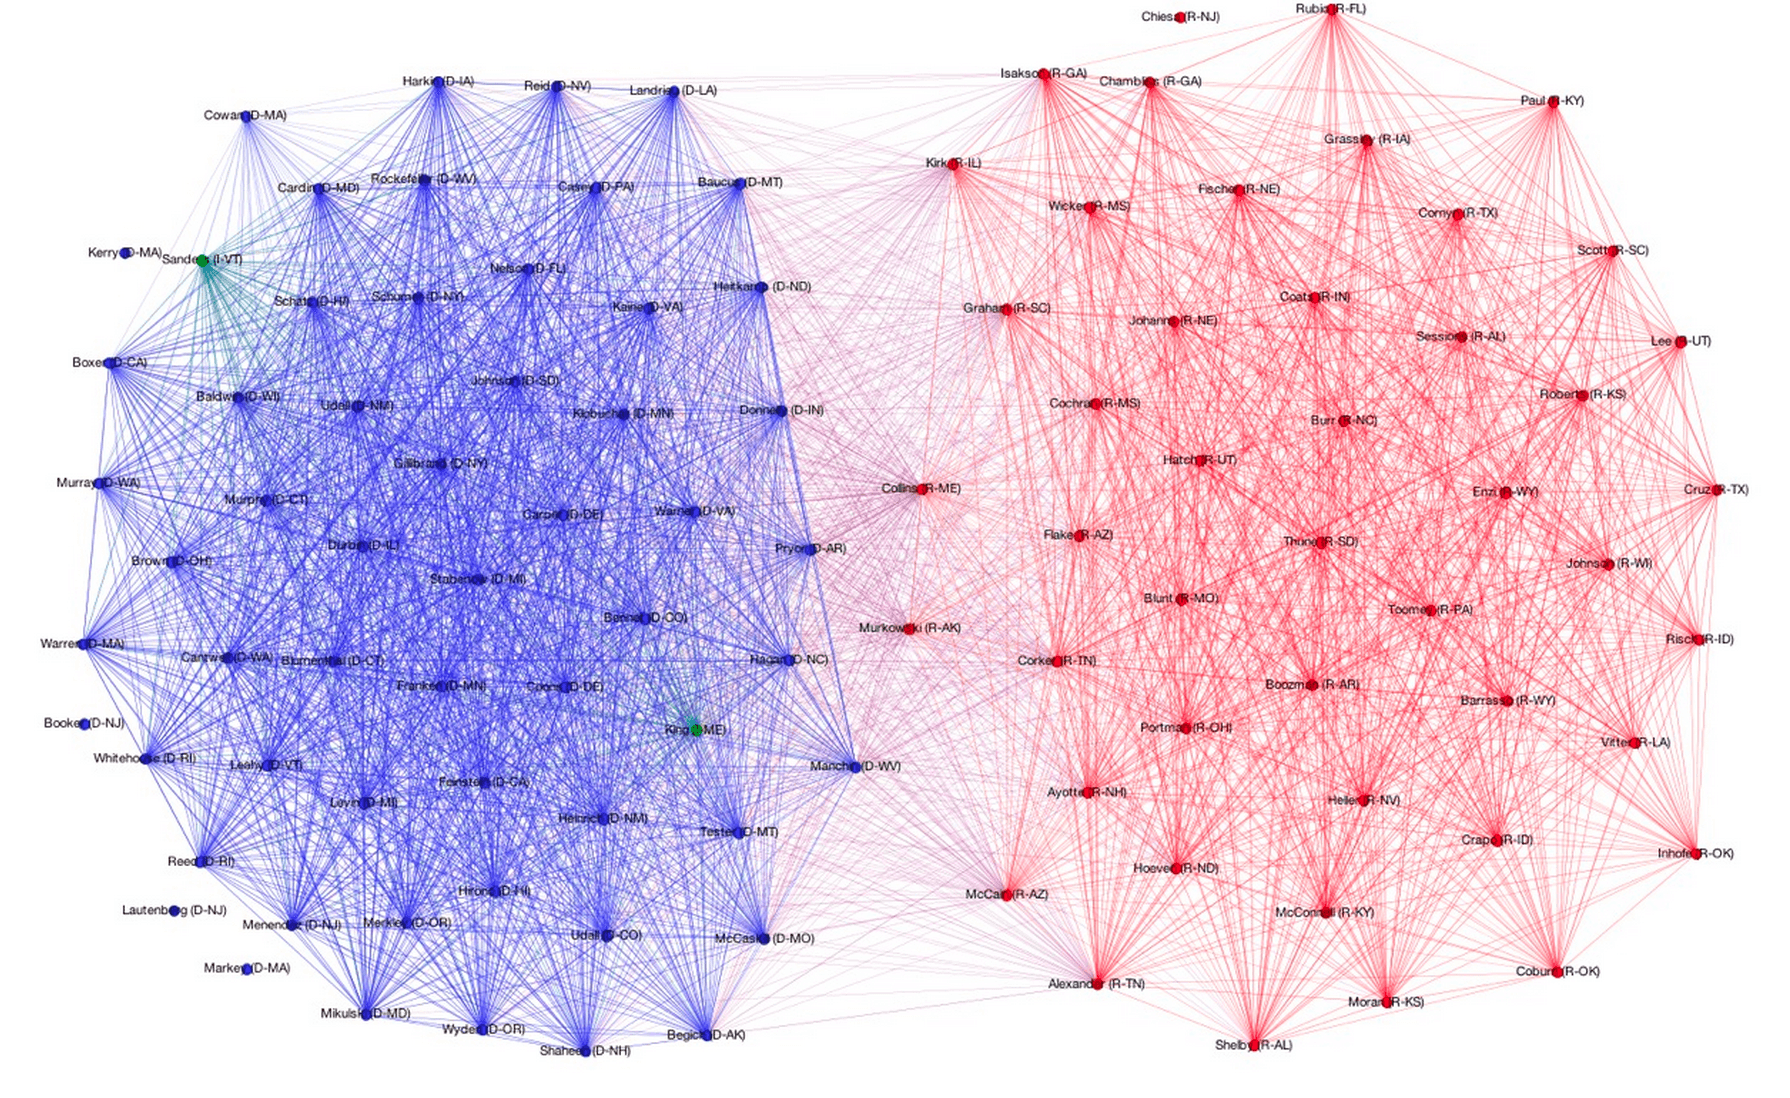 Force-directed graph illustrating voting relationships between US Senators